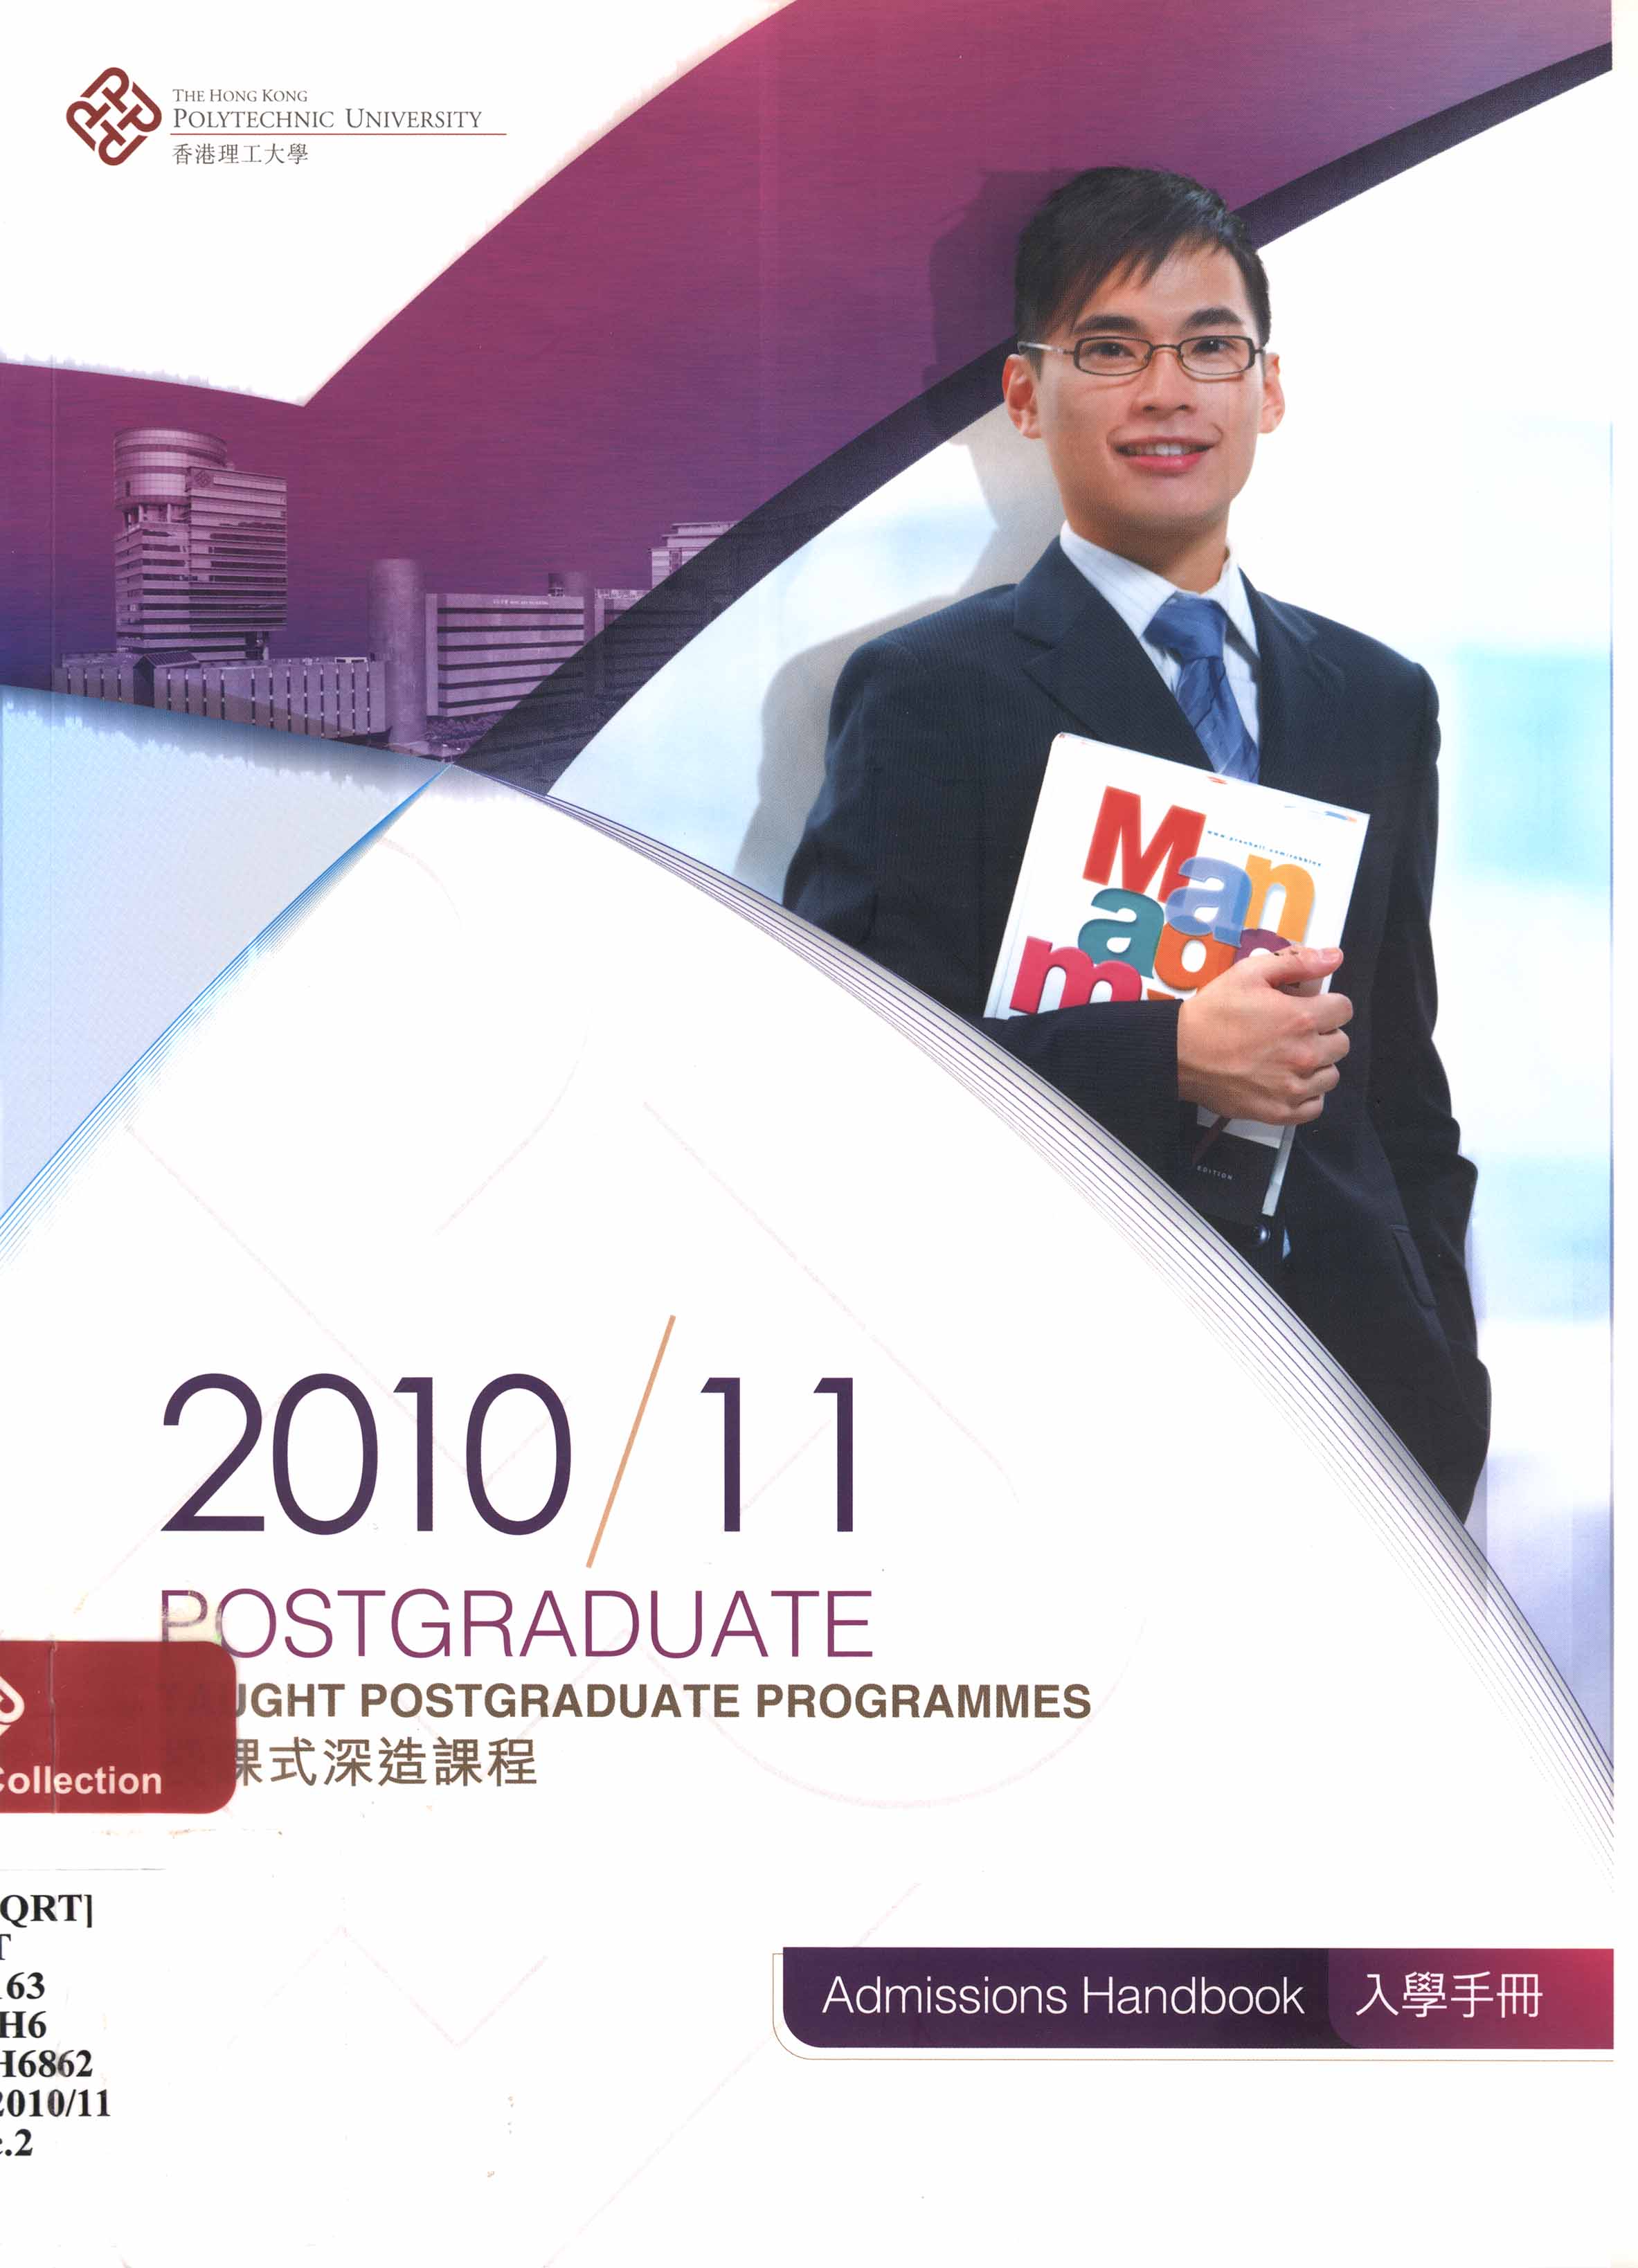 Hong Kong Polytechnic University. Taught postgraduate programmes: admissions handbook 2010/11